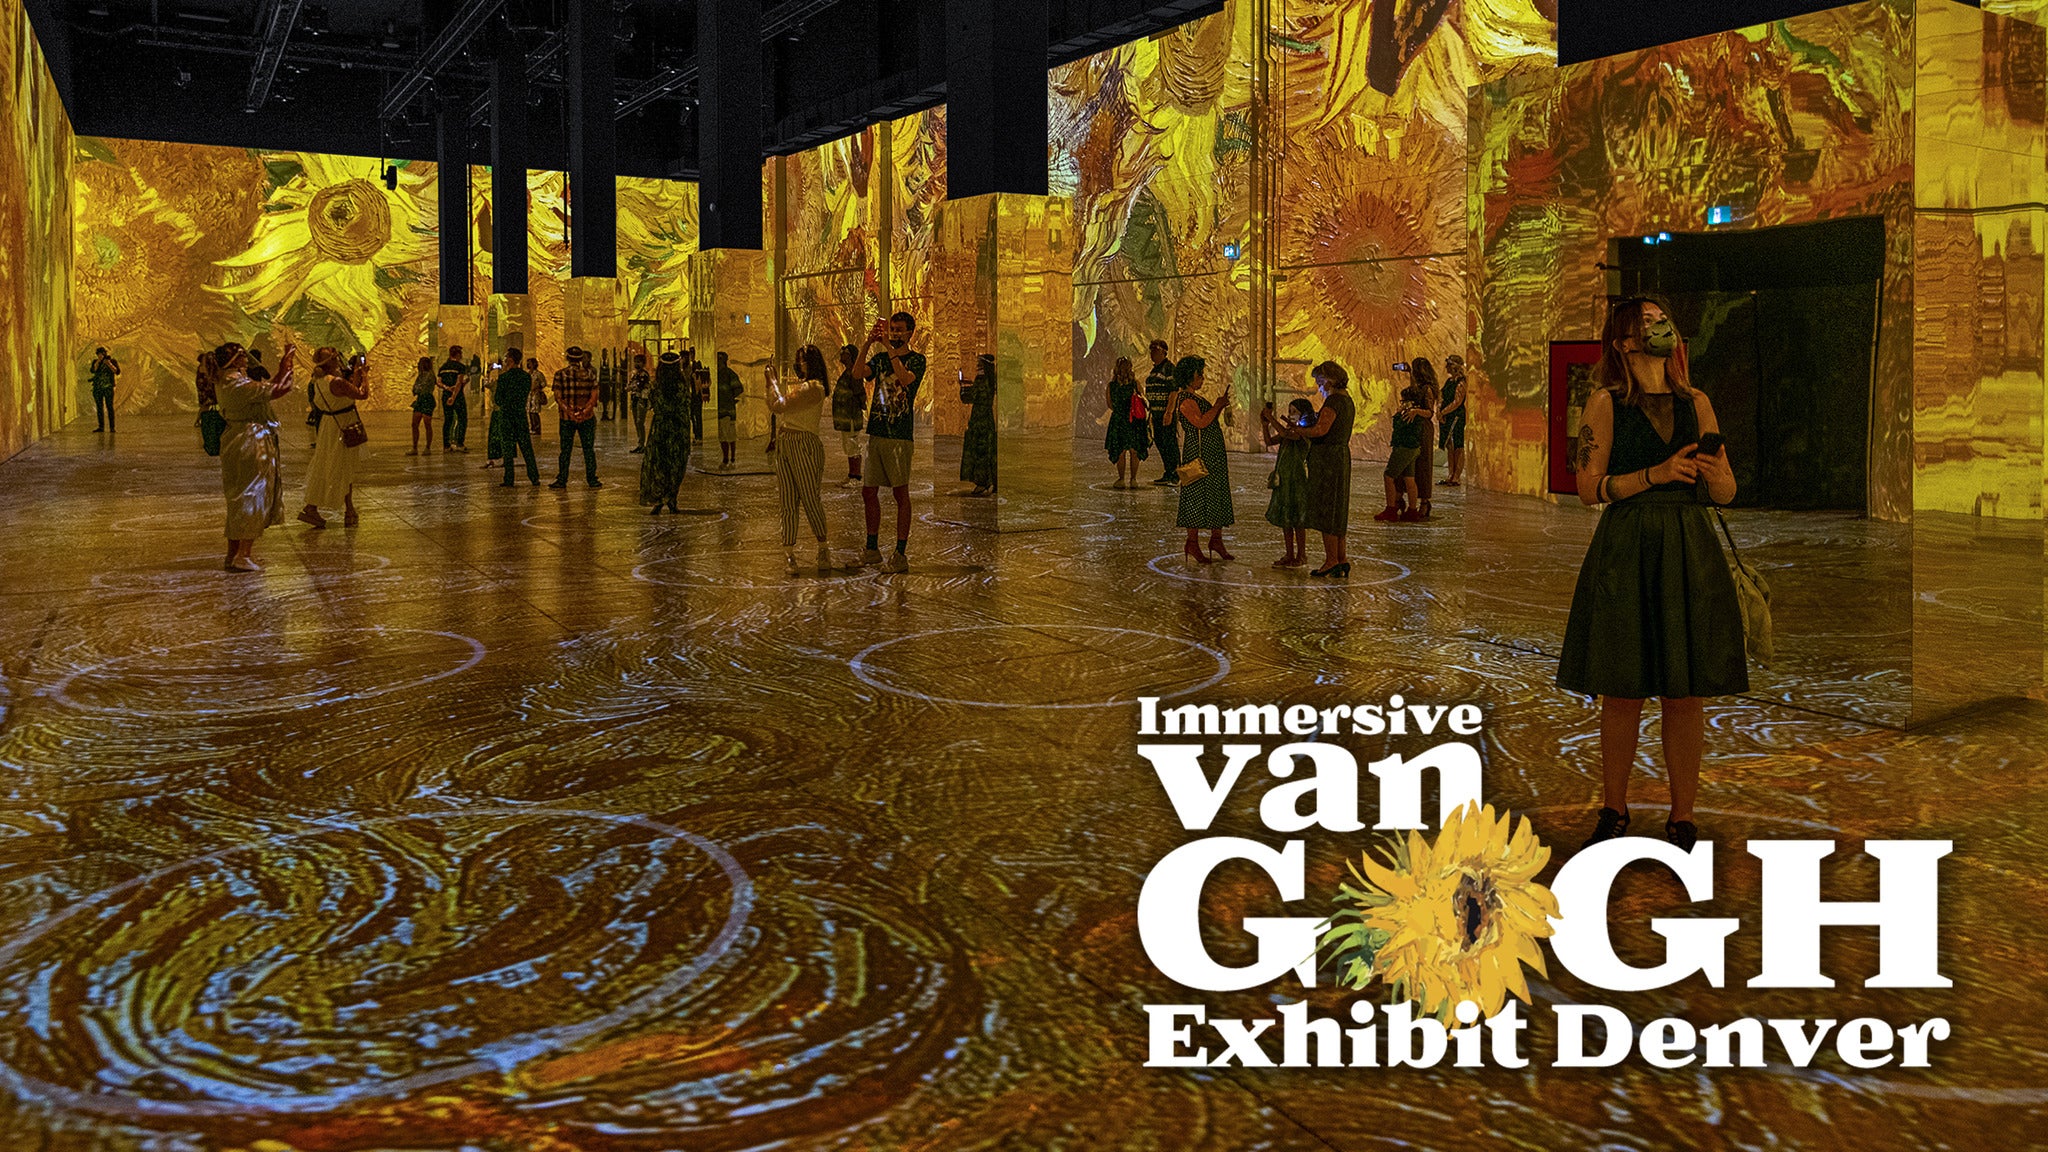 Gogh With Lifeway Kefir Immersive Yoga at Lighthouse Denver - Denver, CO 80216